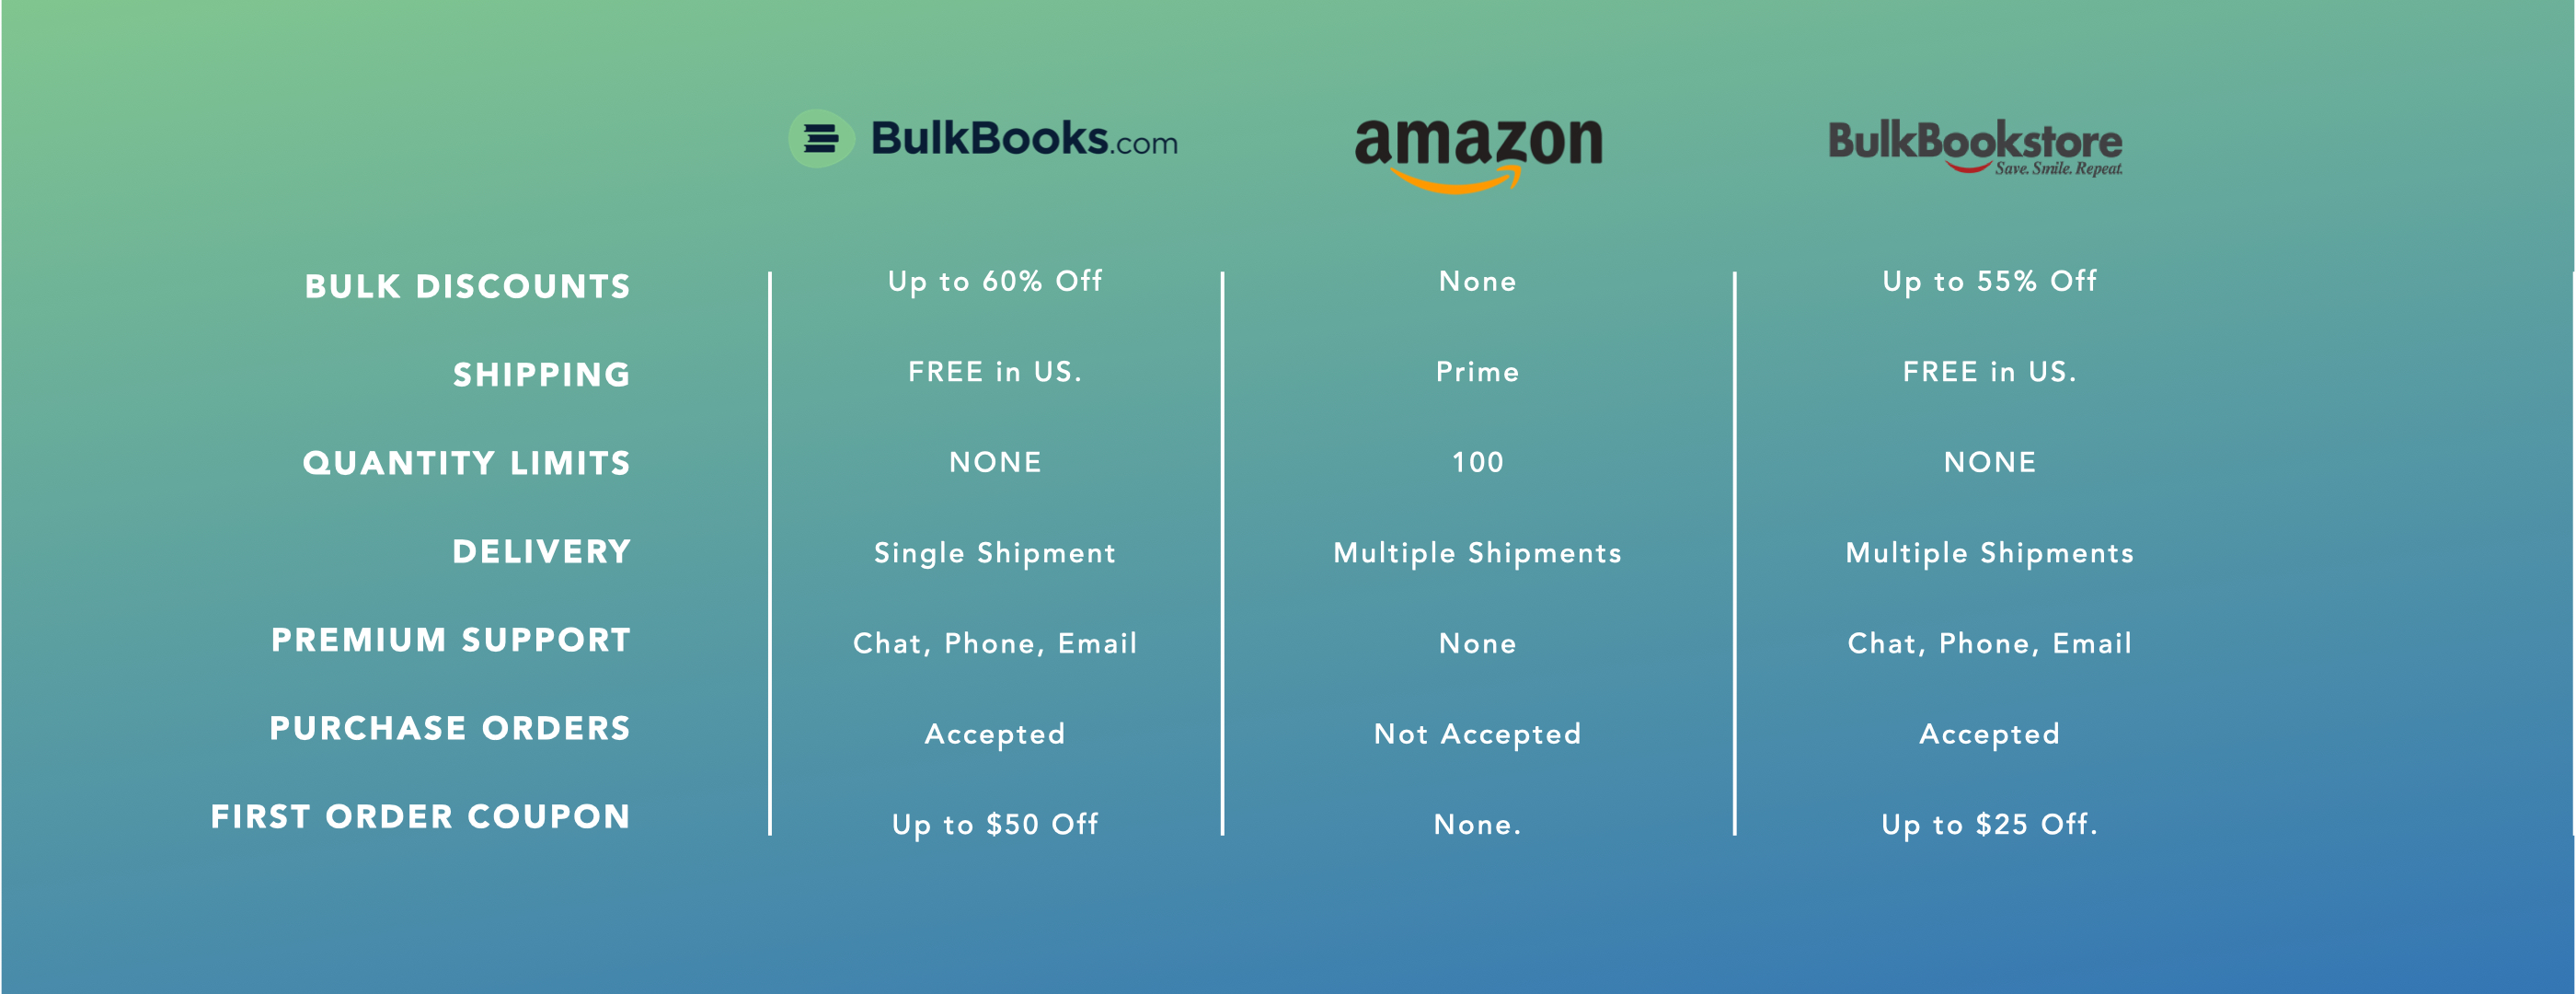 Bibles in Bulk: Compare Bulkbooks.com vs Amazon vs BulkBookstore.com